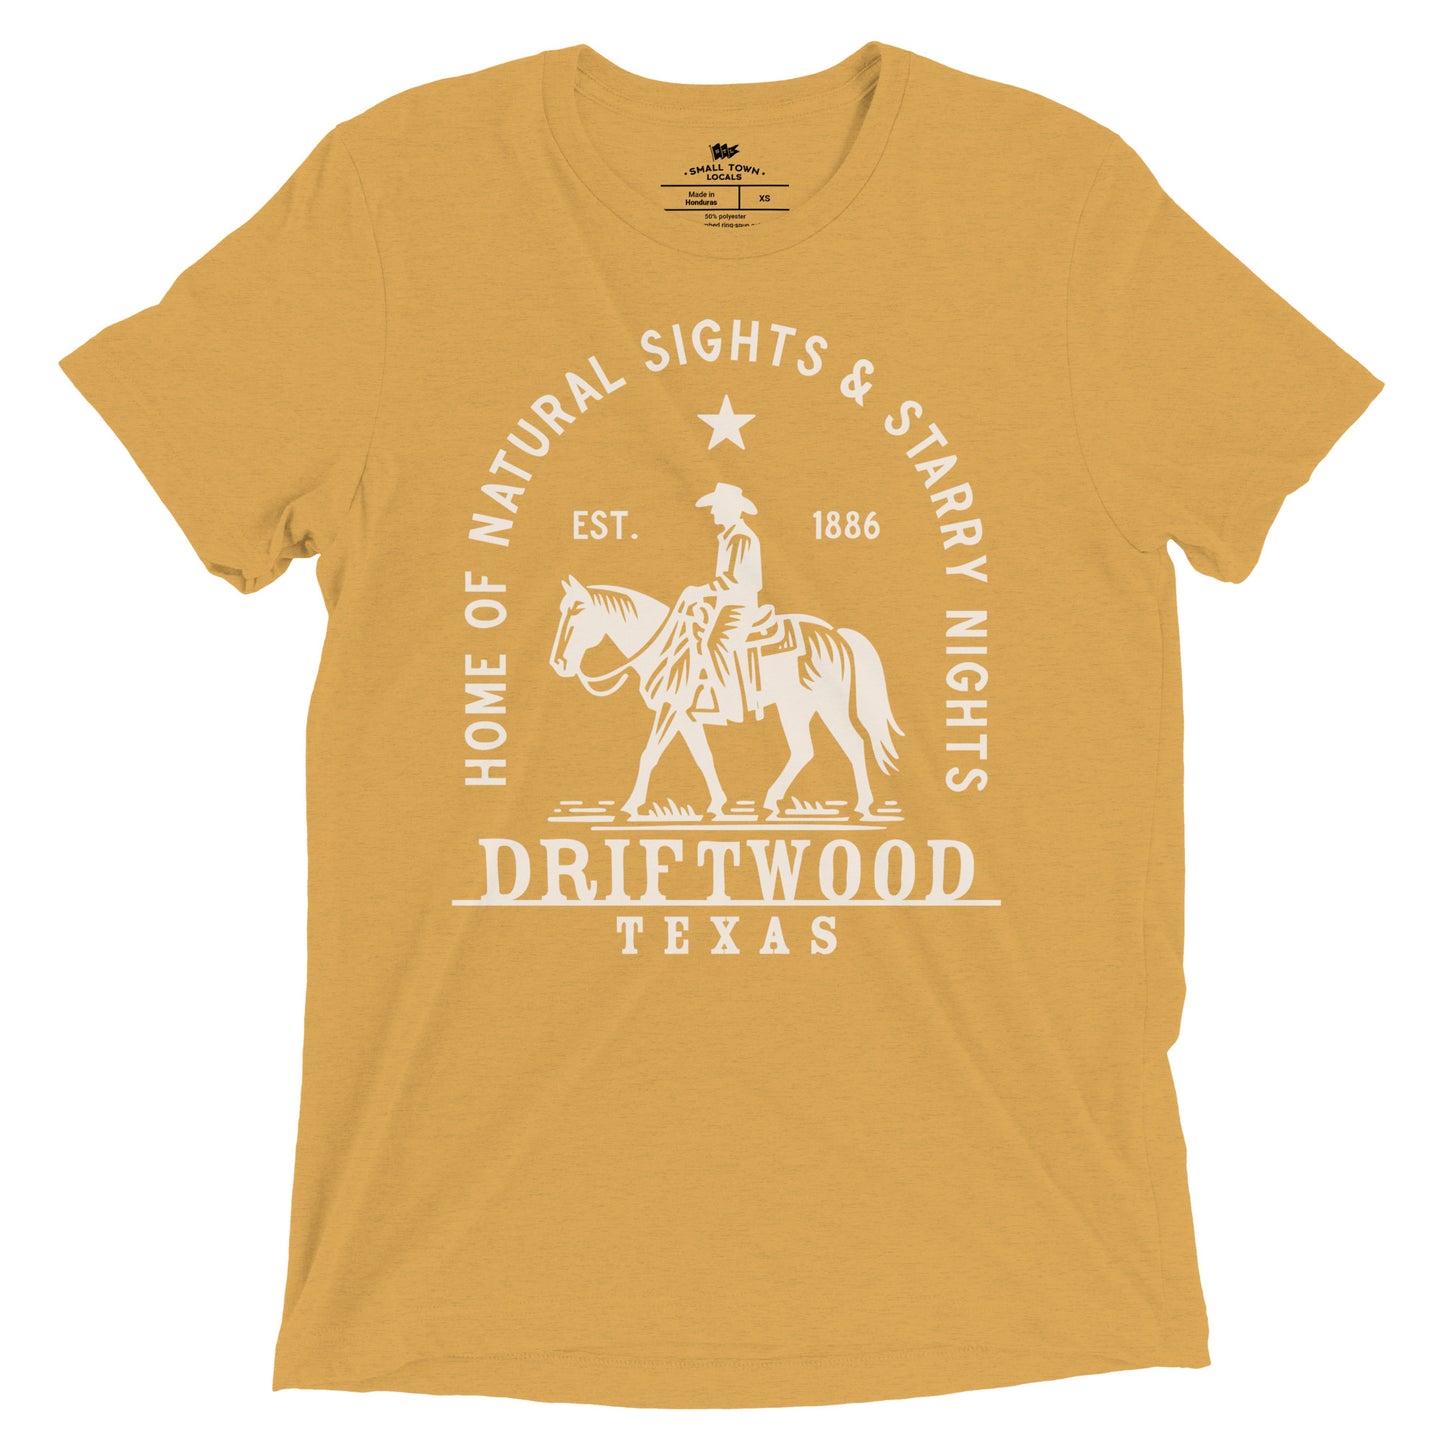 Driftwood Starry Nights